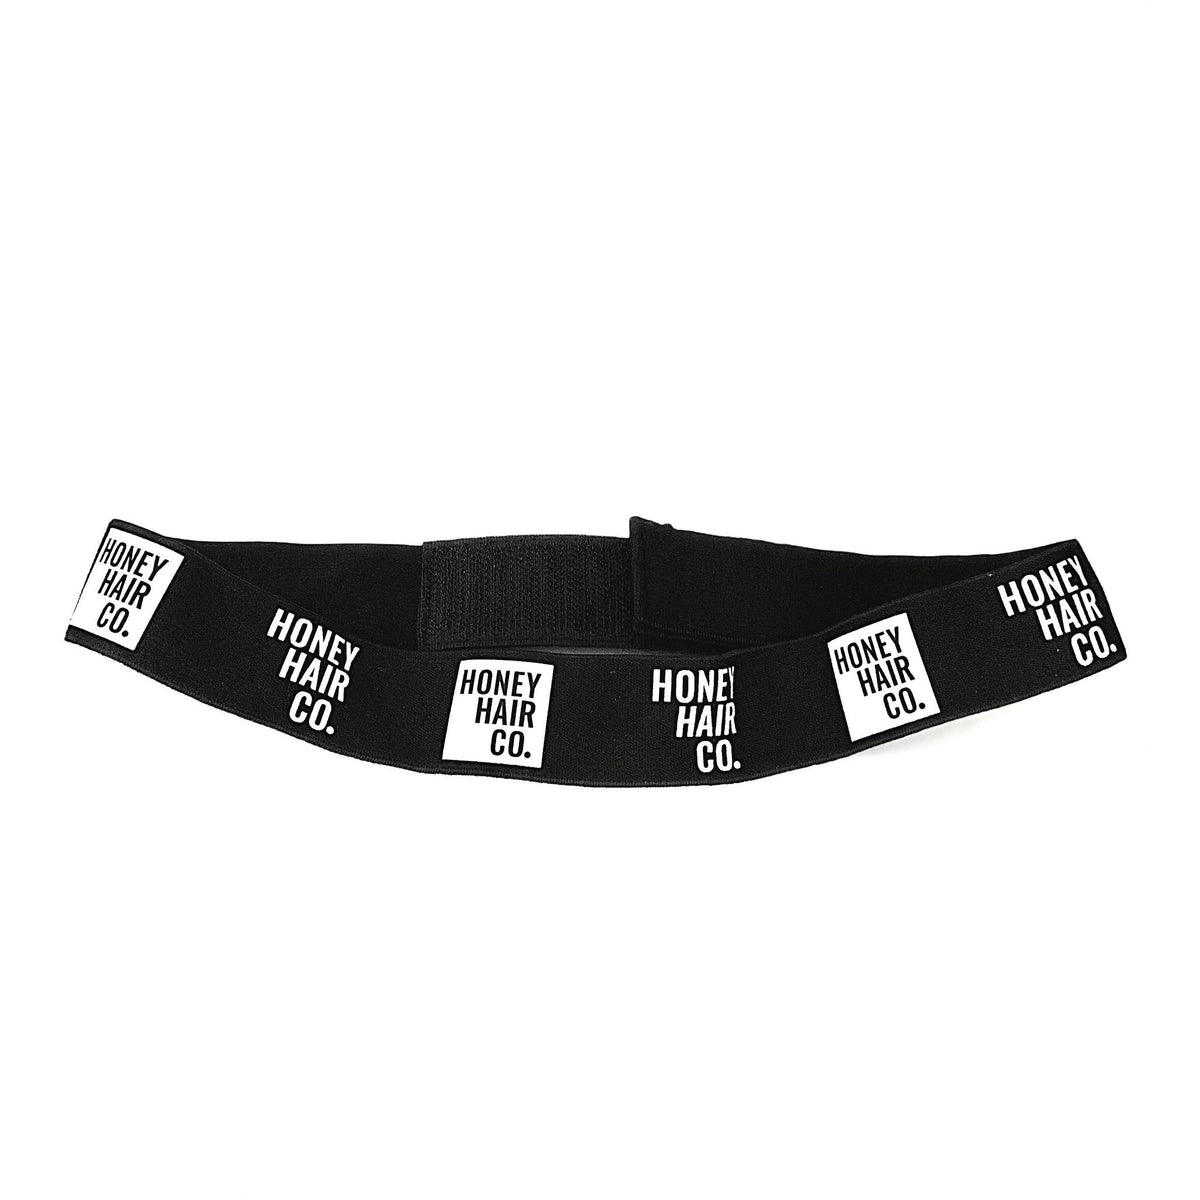 Belt - Black, Afterpay, Zip Pay, Sezzle